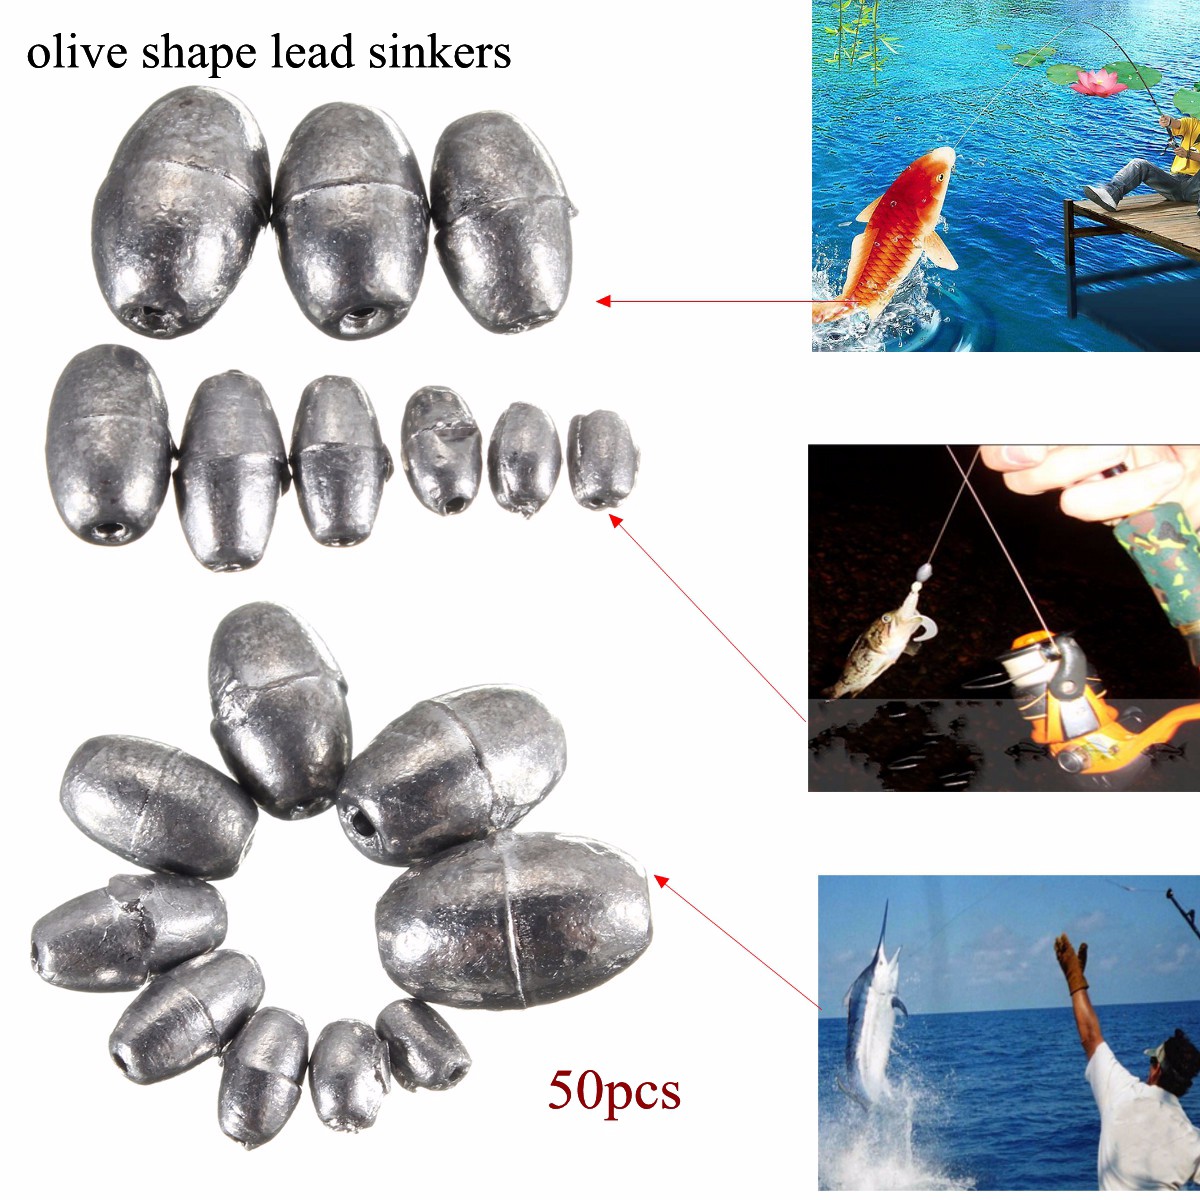 100 Pcs Olive-Shape Weight Lead Sinkers Pure Lead Making Fishing Sinker Tackle 